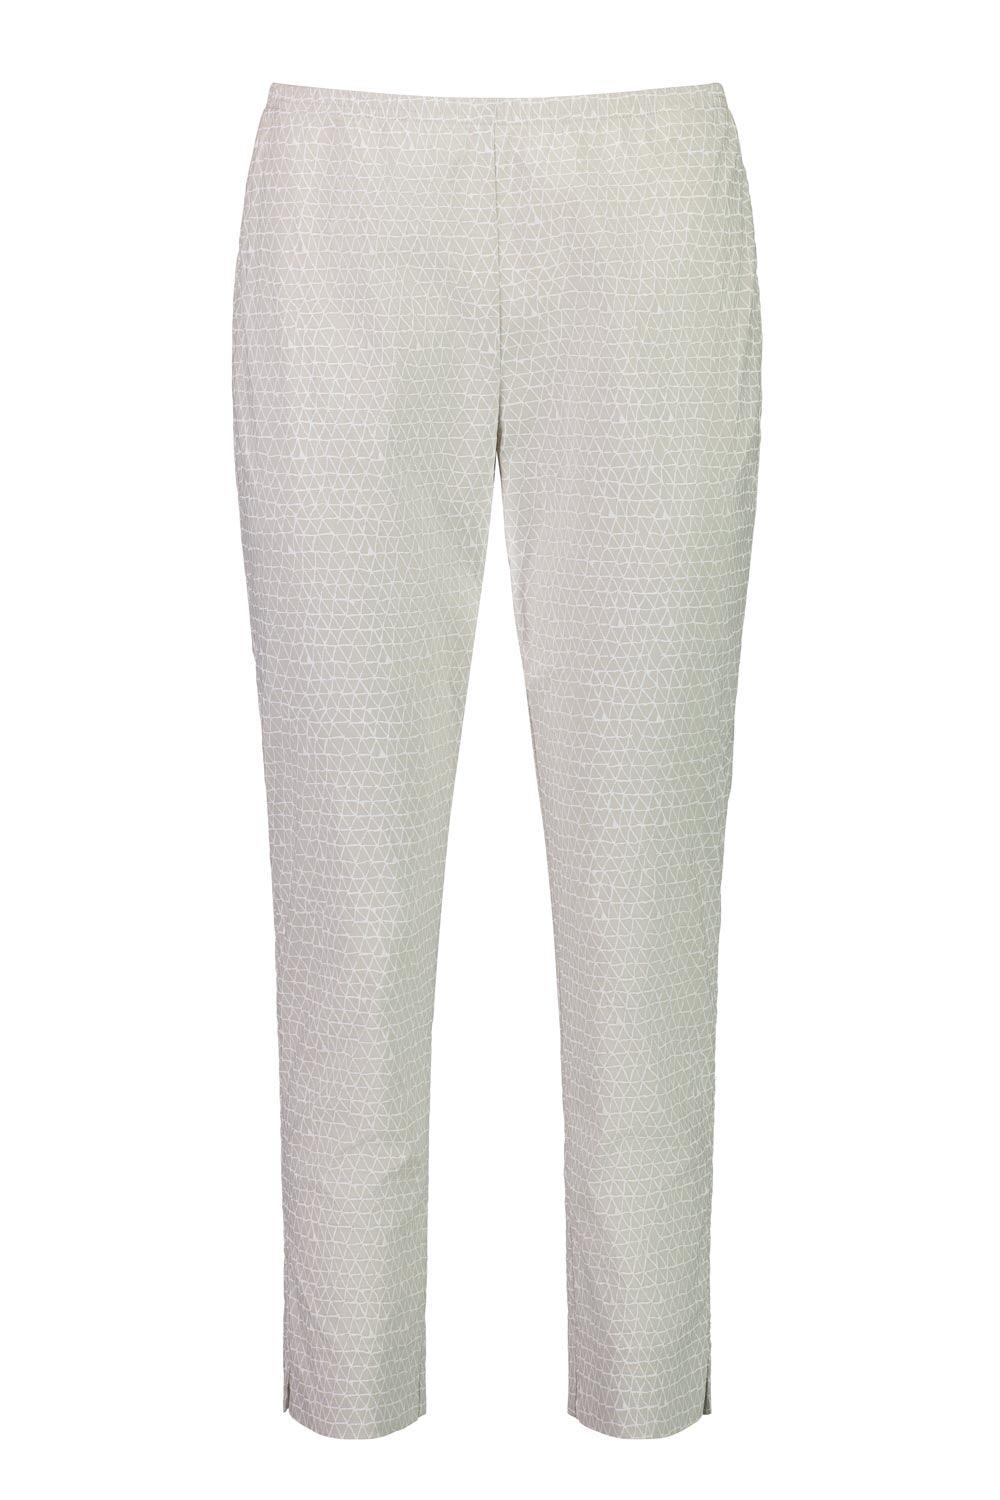 Acrobat Weave Eclipse Pant - Pumice/White - Pant VERGE